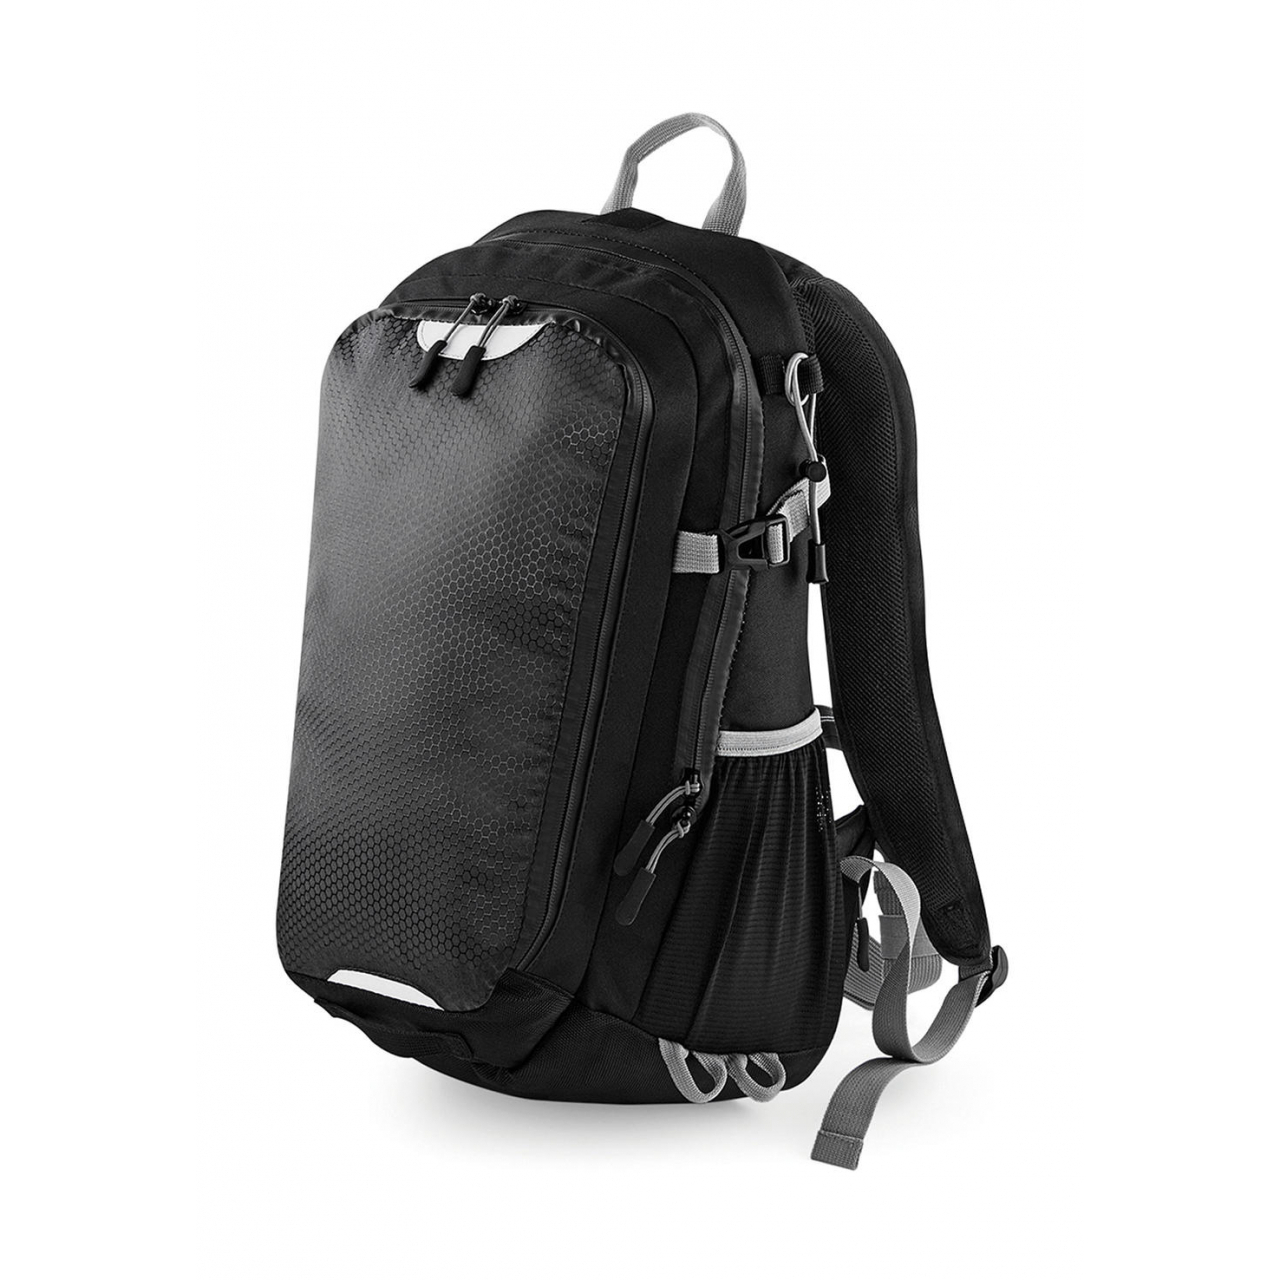 Batoh Quadra SLX 20 Litre Daypack - černý